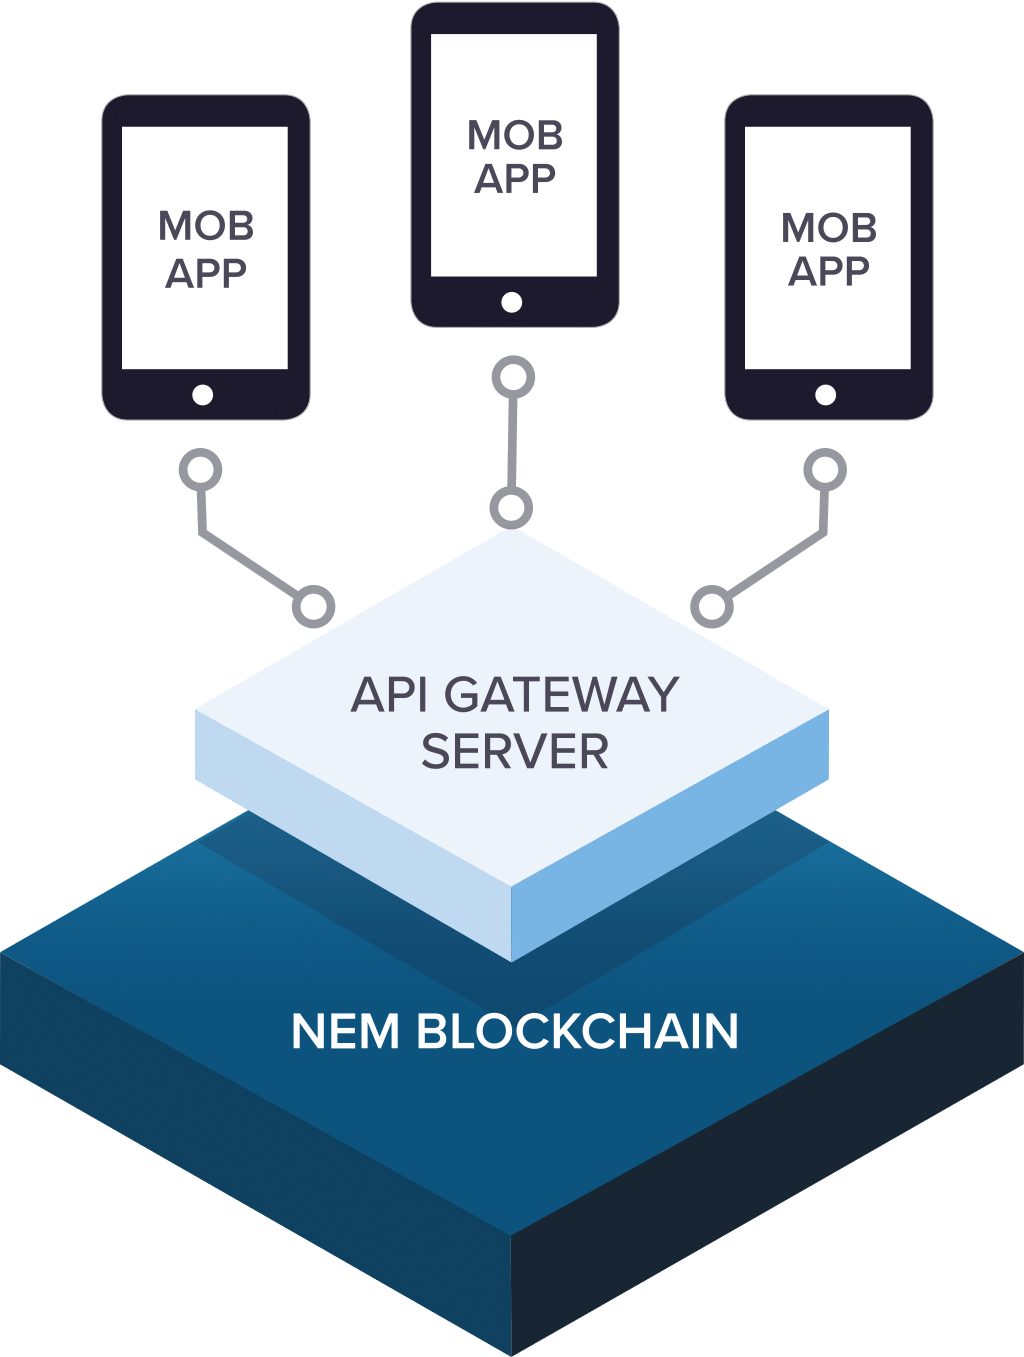 A mobile app directly using the NEM Blockchain